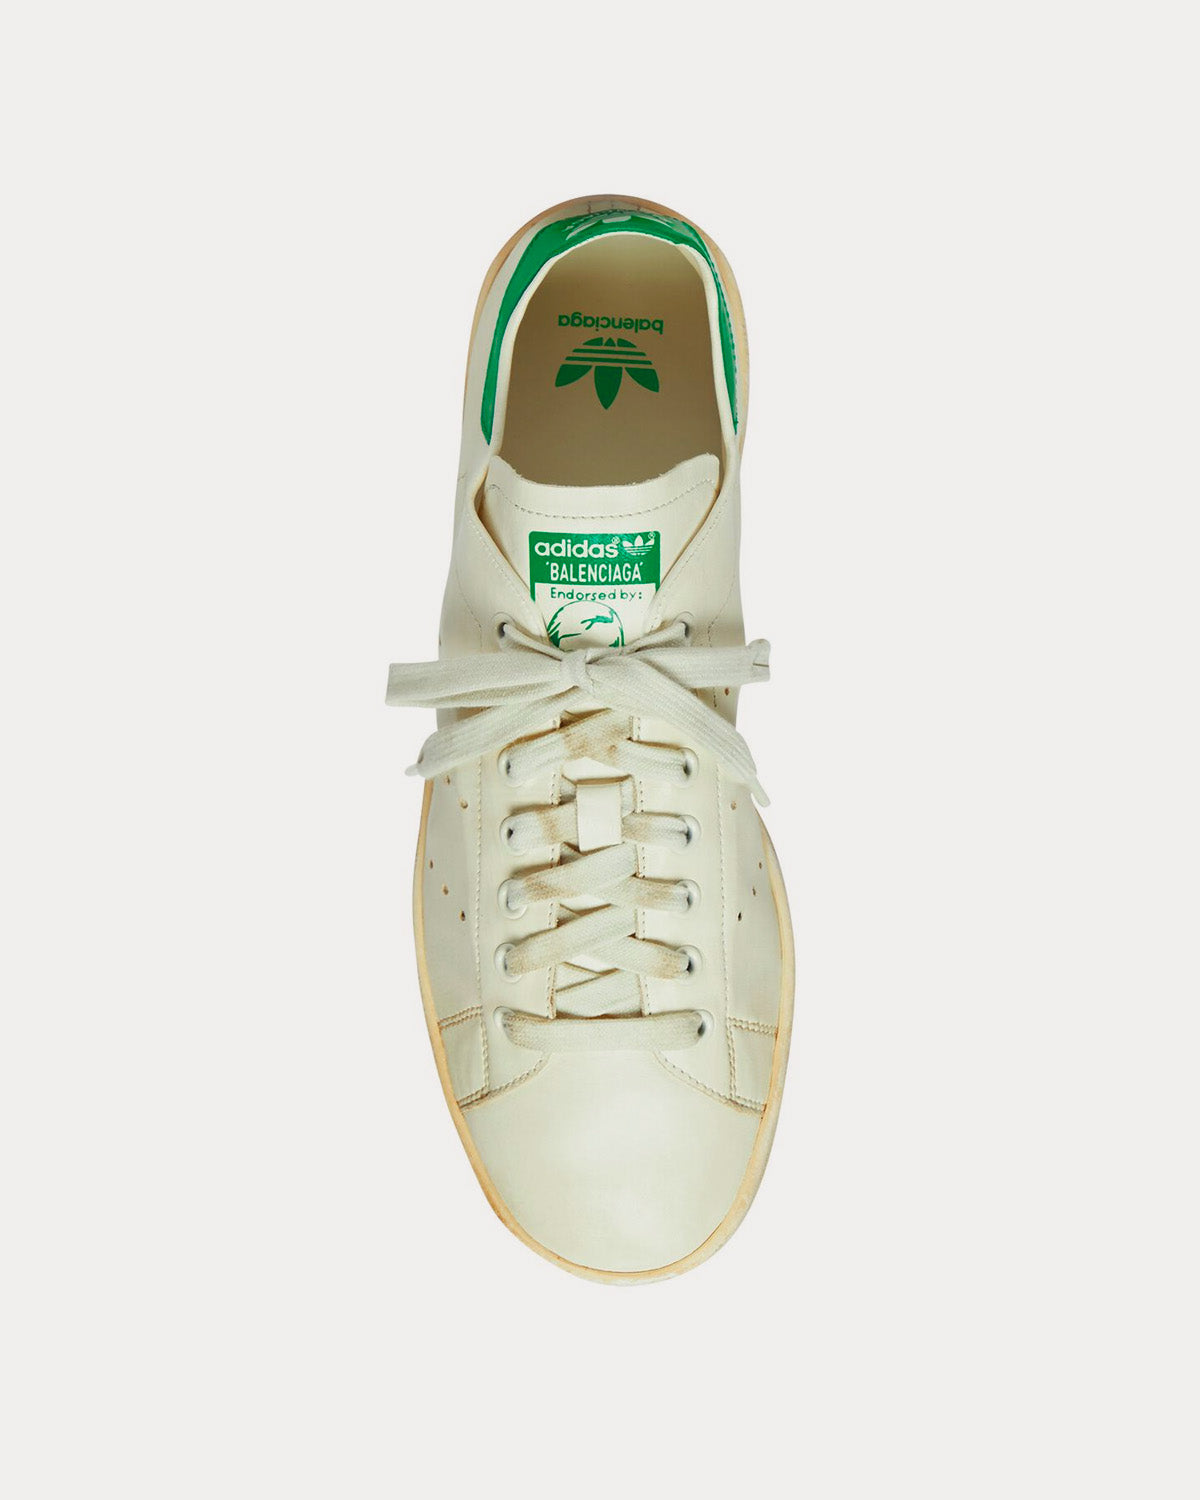 Balenciaga x Adidas - Stan Smith Worn-Out Off-White / Green Low Top Sneakers